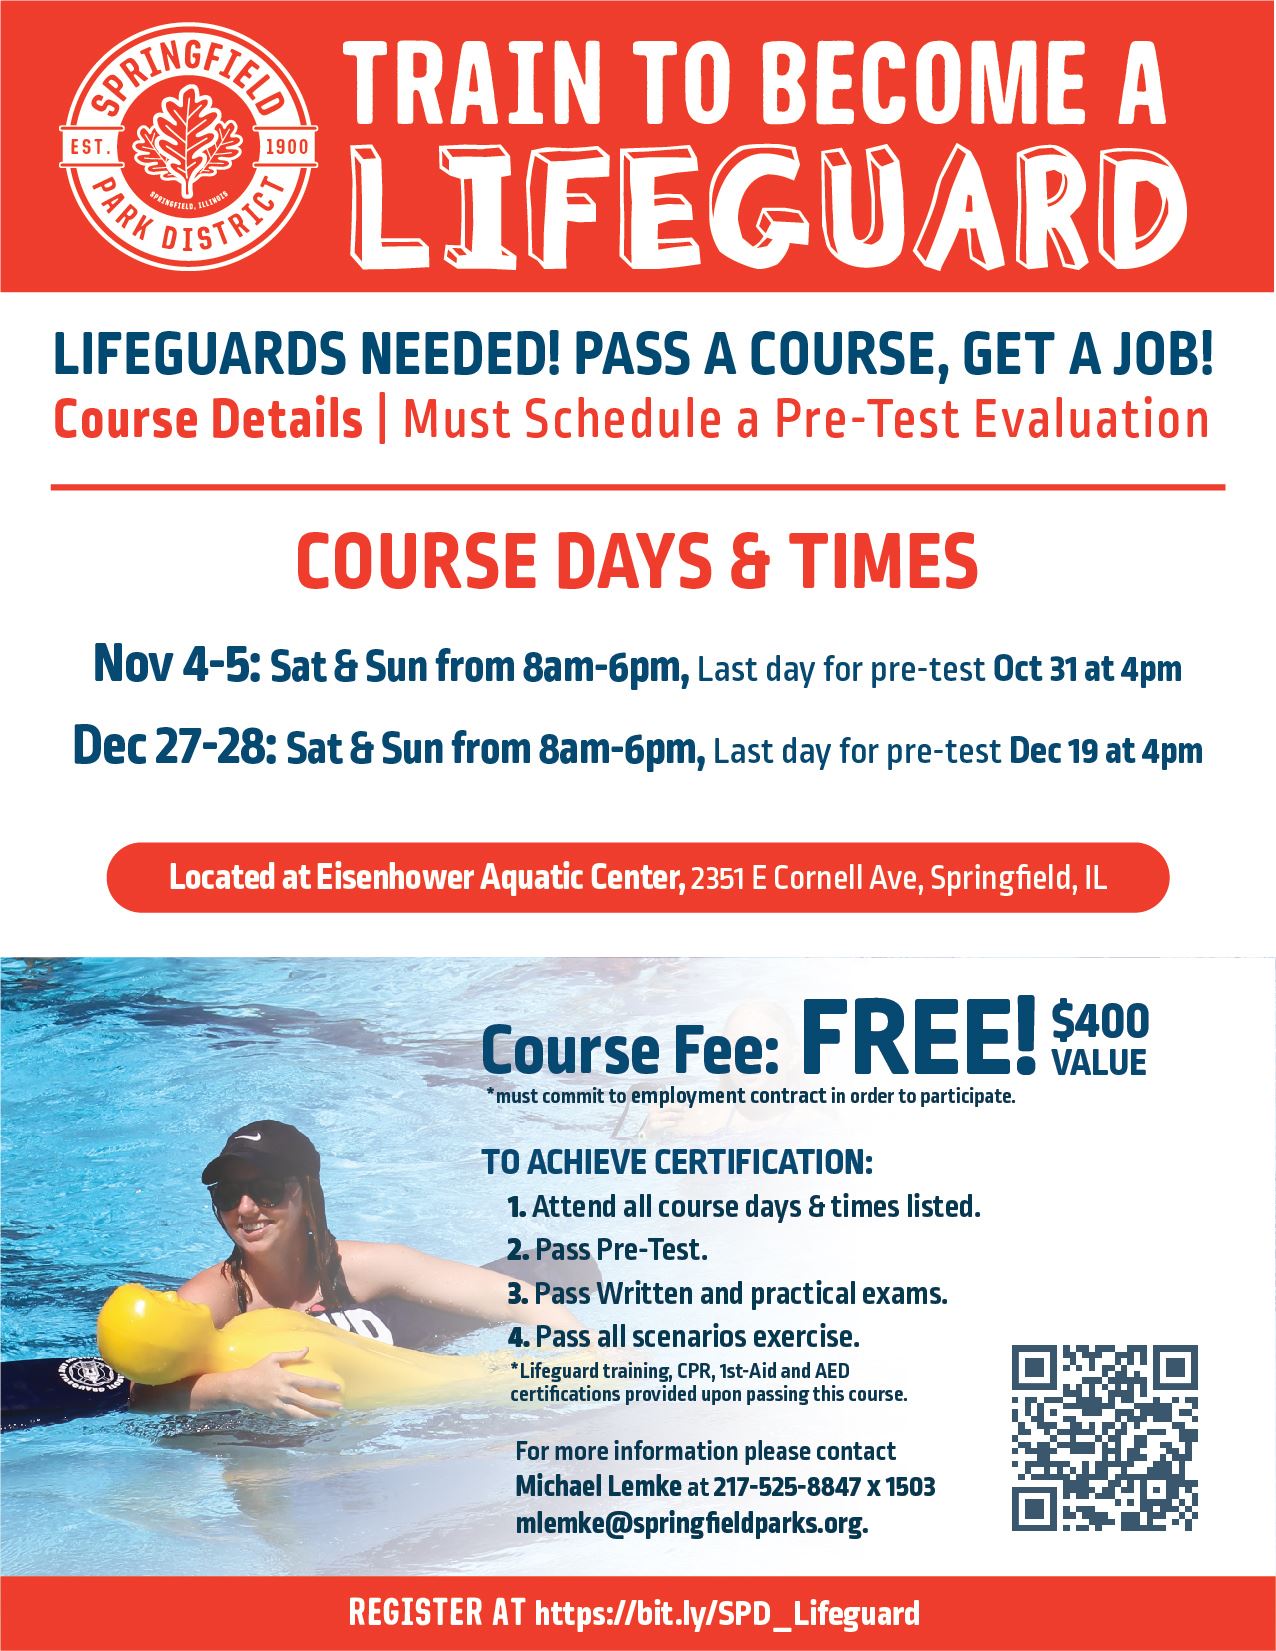 free_lifeguarding_classes_image.jpg